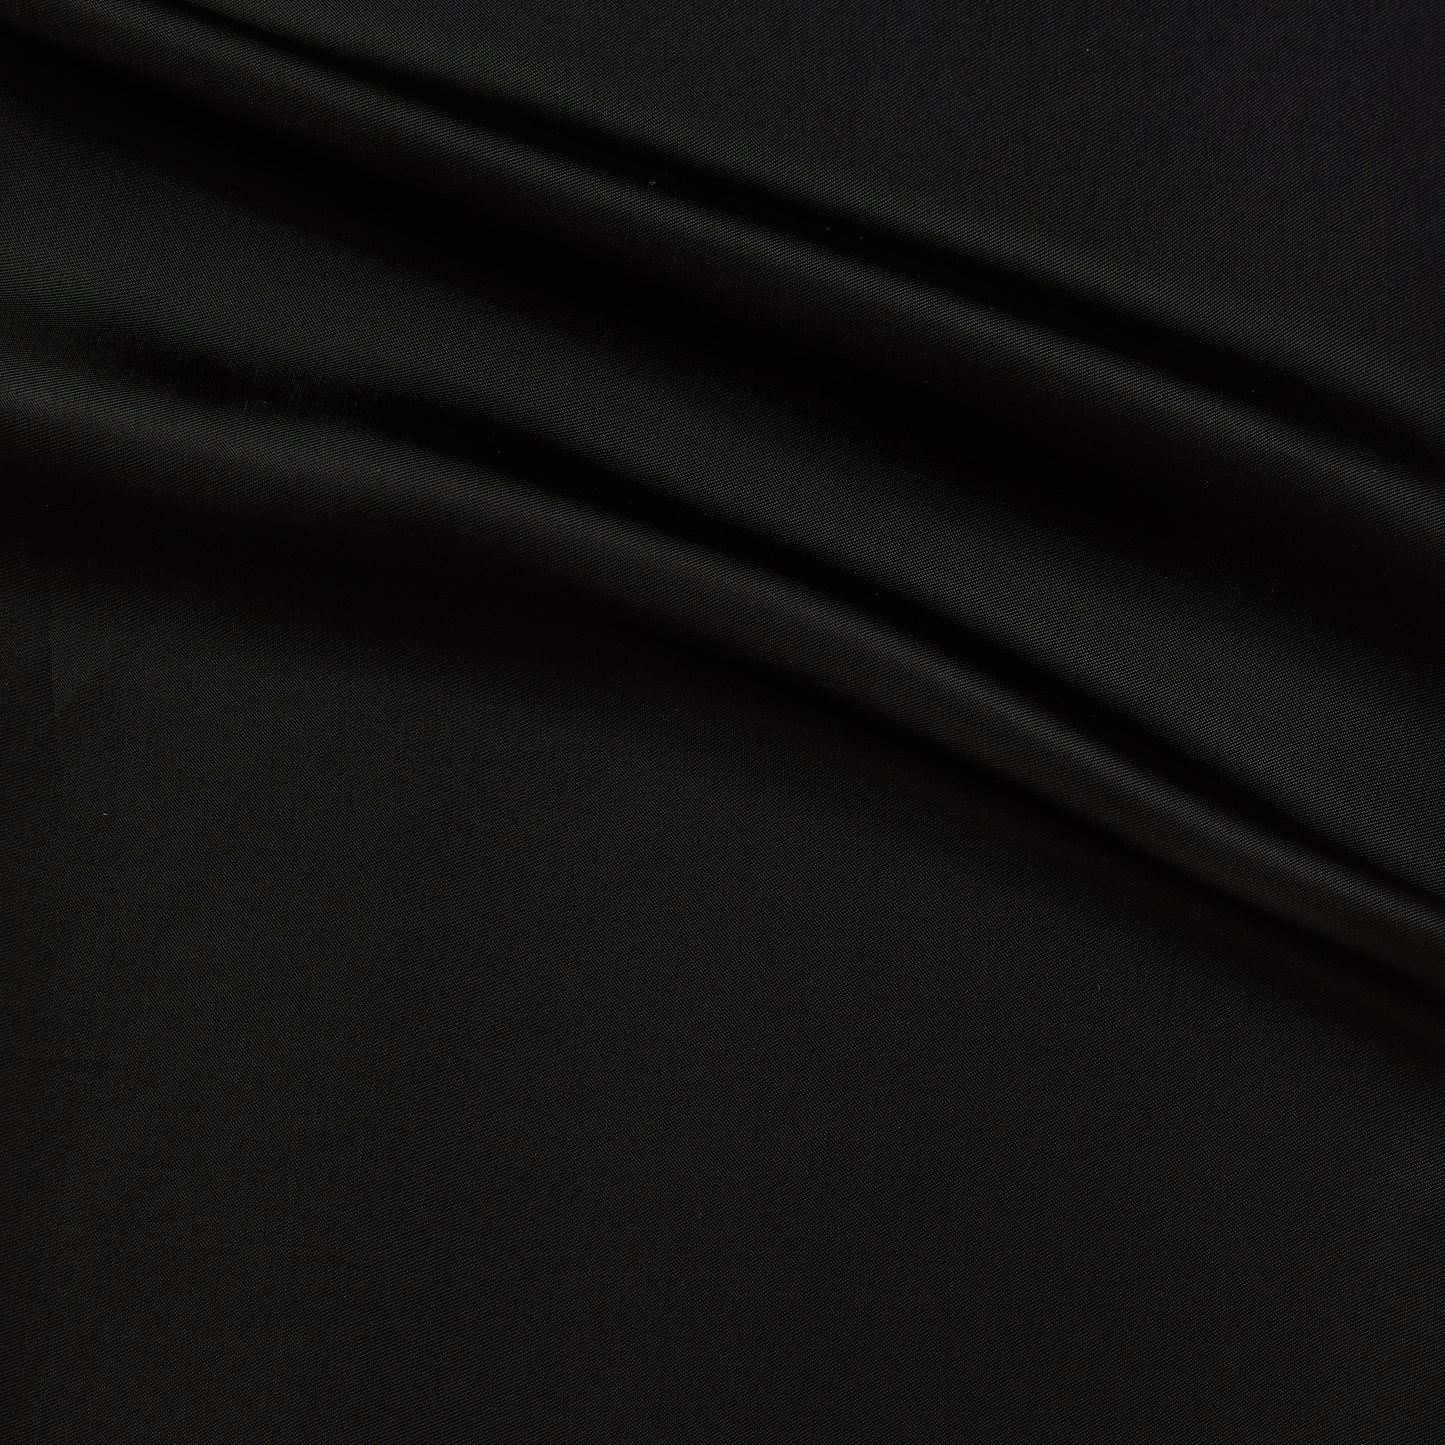 saga presenting the black color version of a pure rayon Fine twill satin with fluid drape